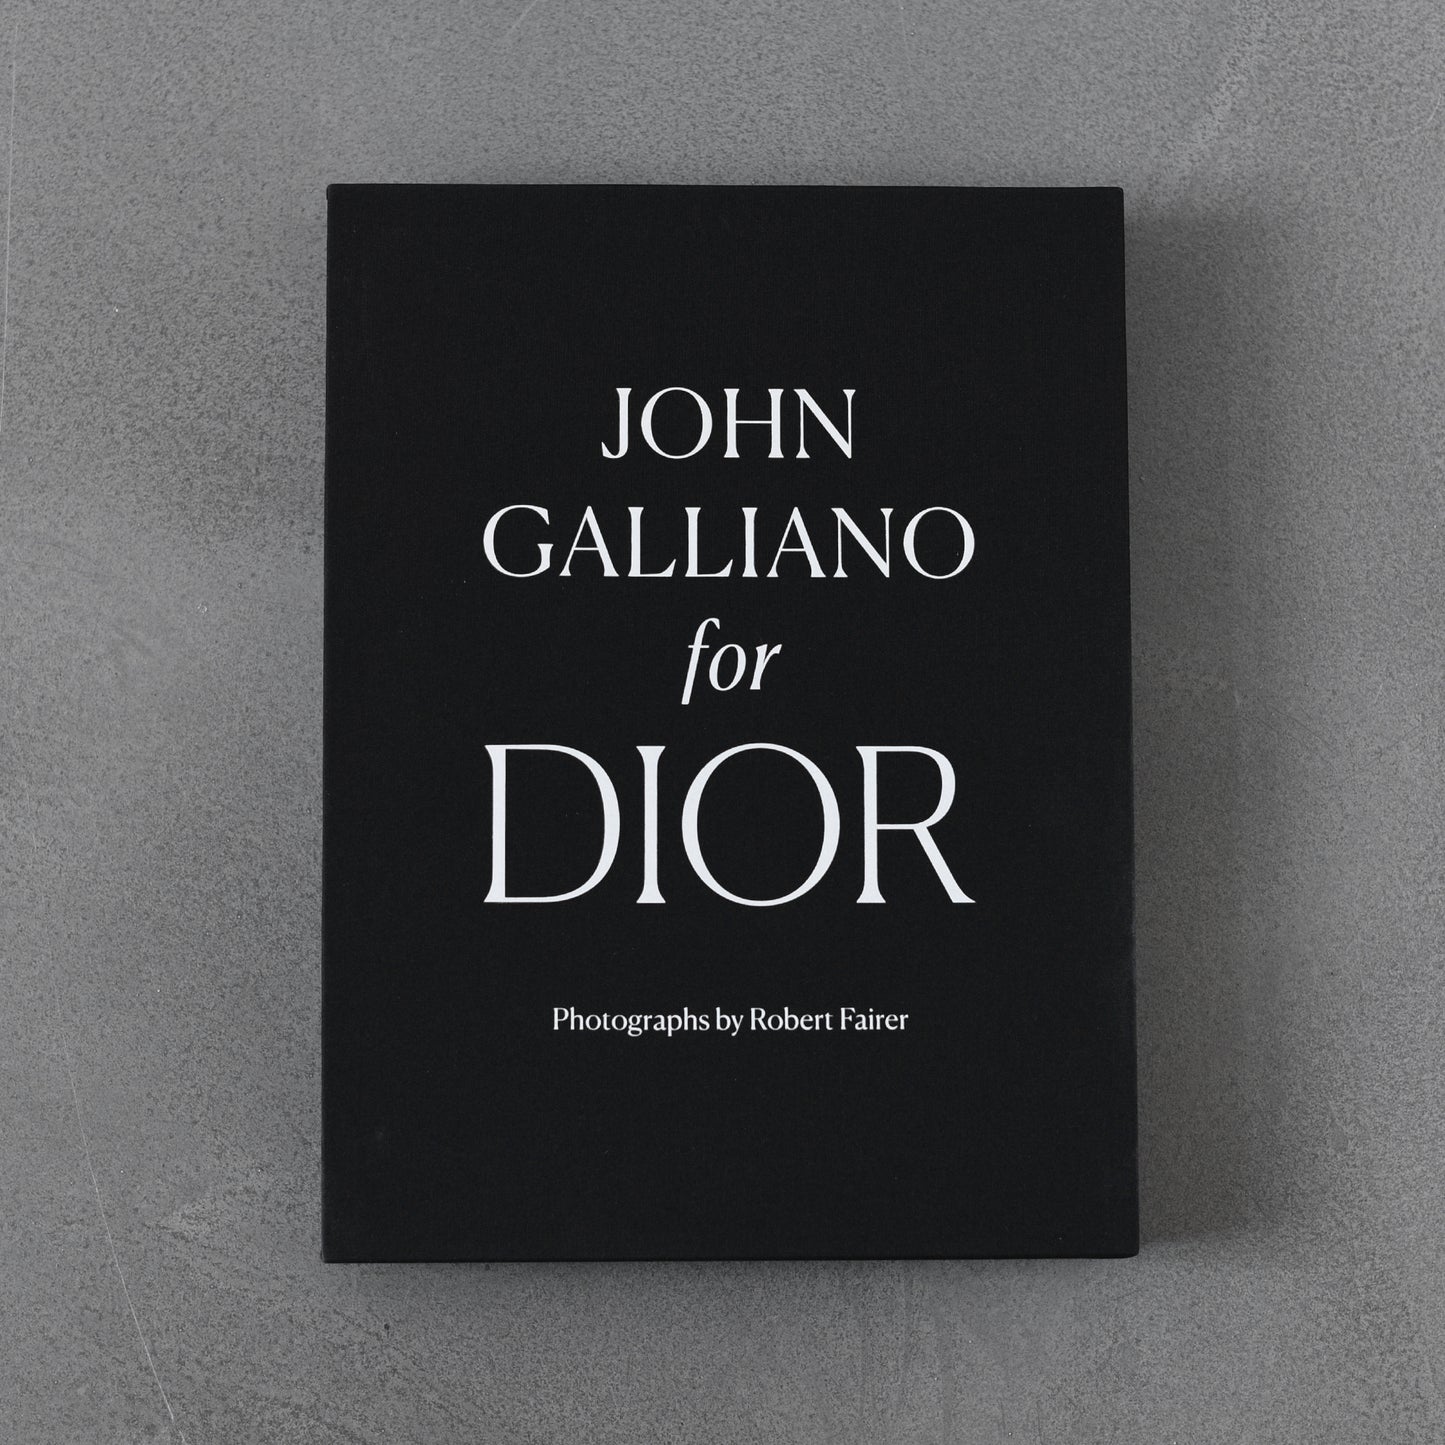 John Galliano for Dior: Photographs by Robert Fairer